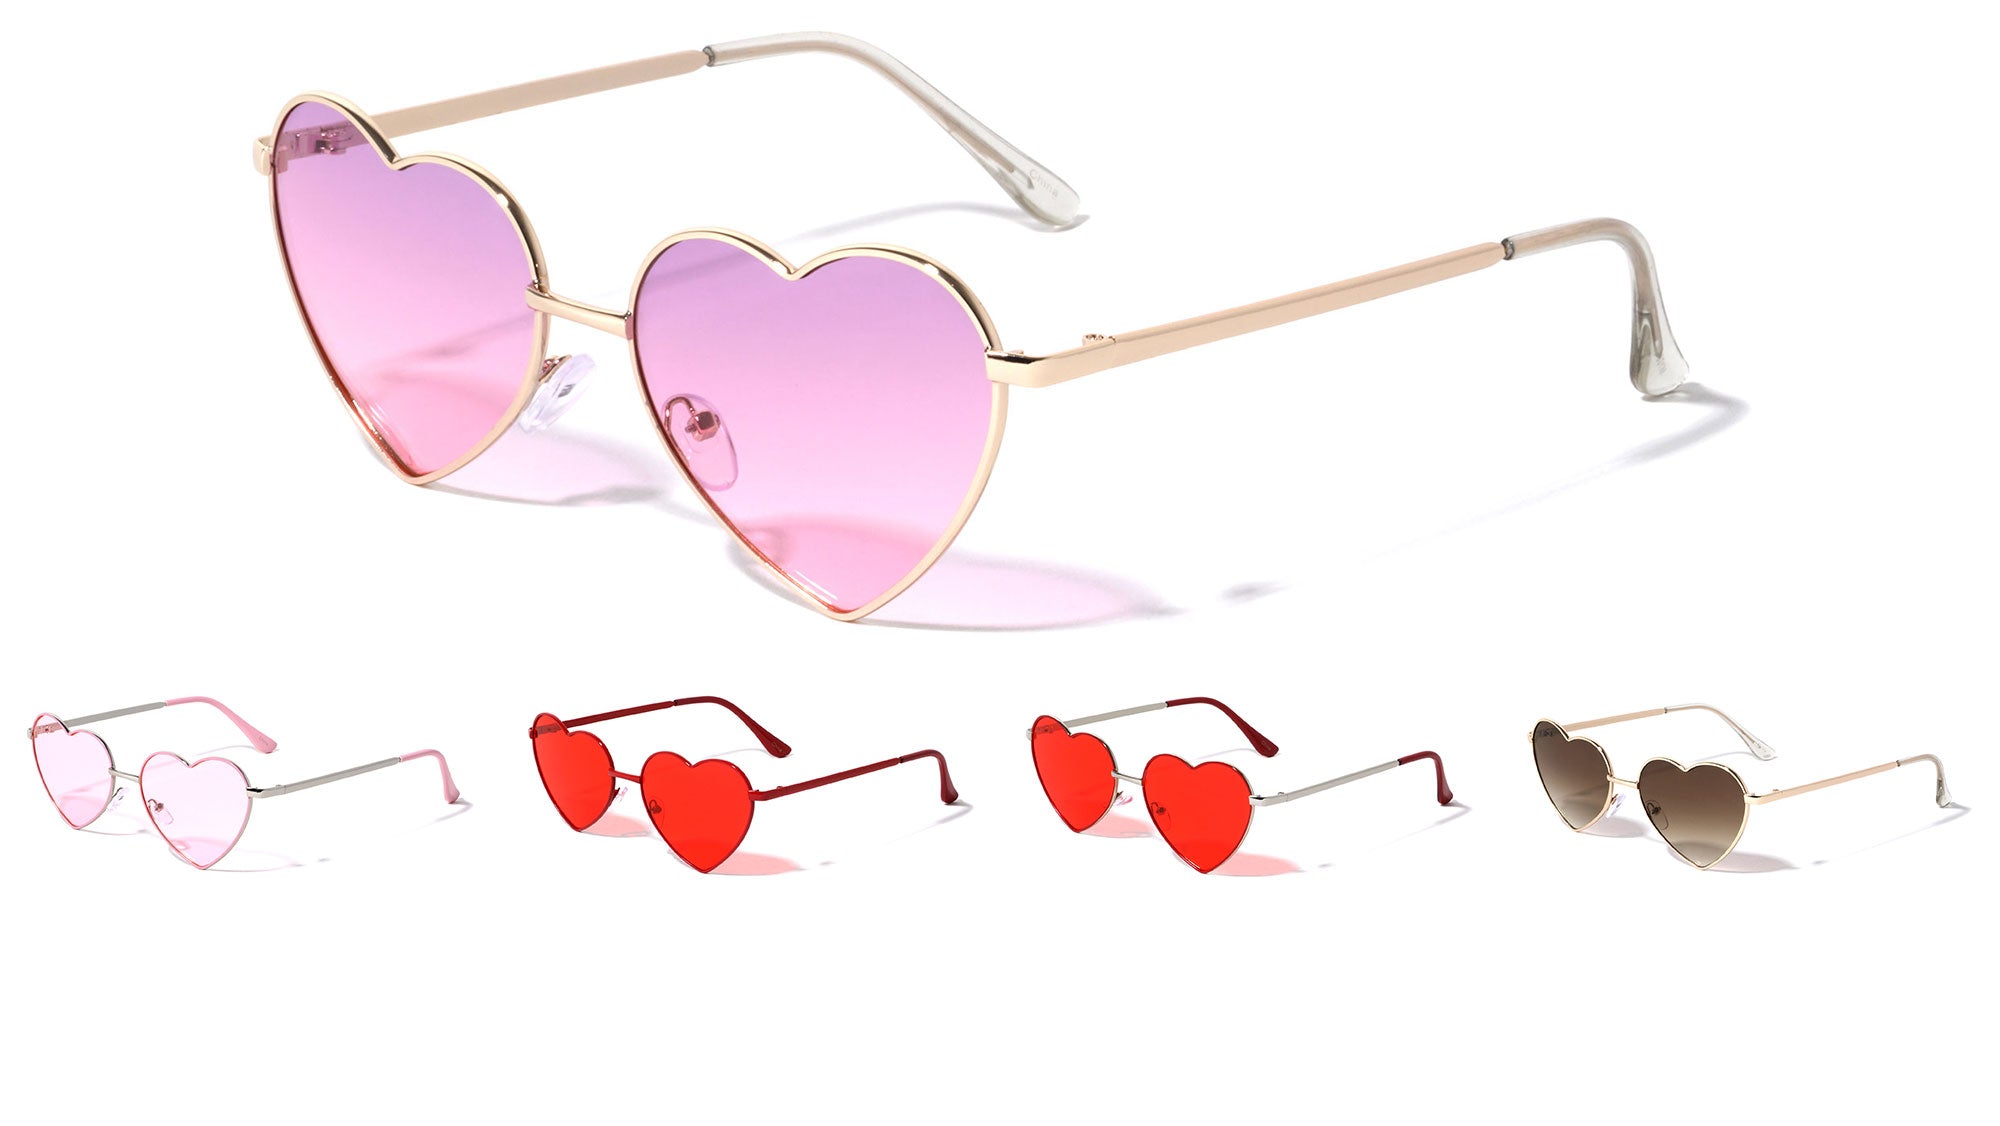 Sunglasses Fashion Frontier Heart M10845 Wholesale - Fashion,